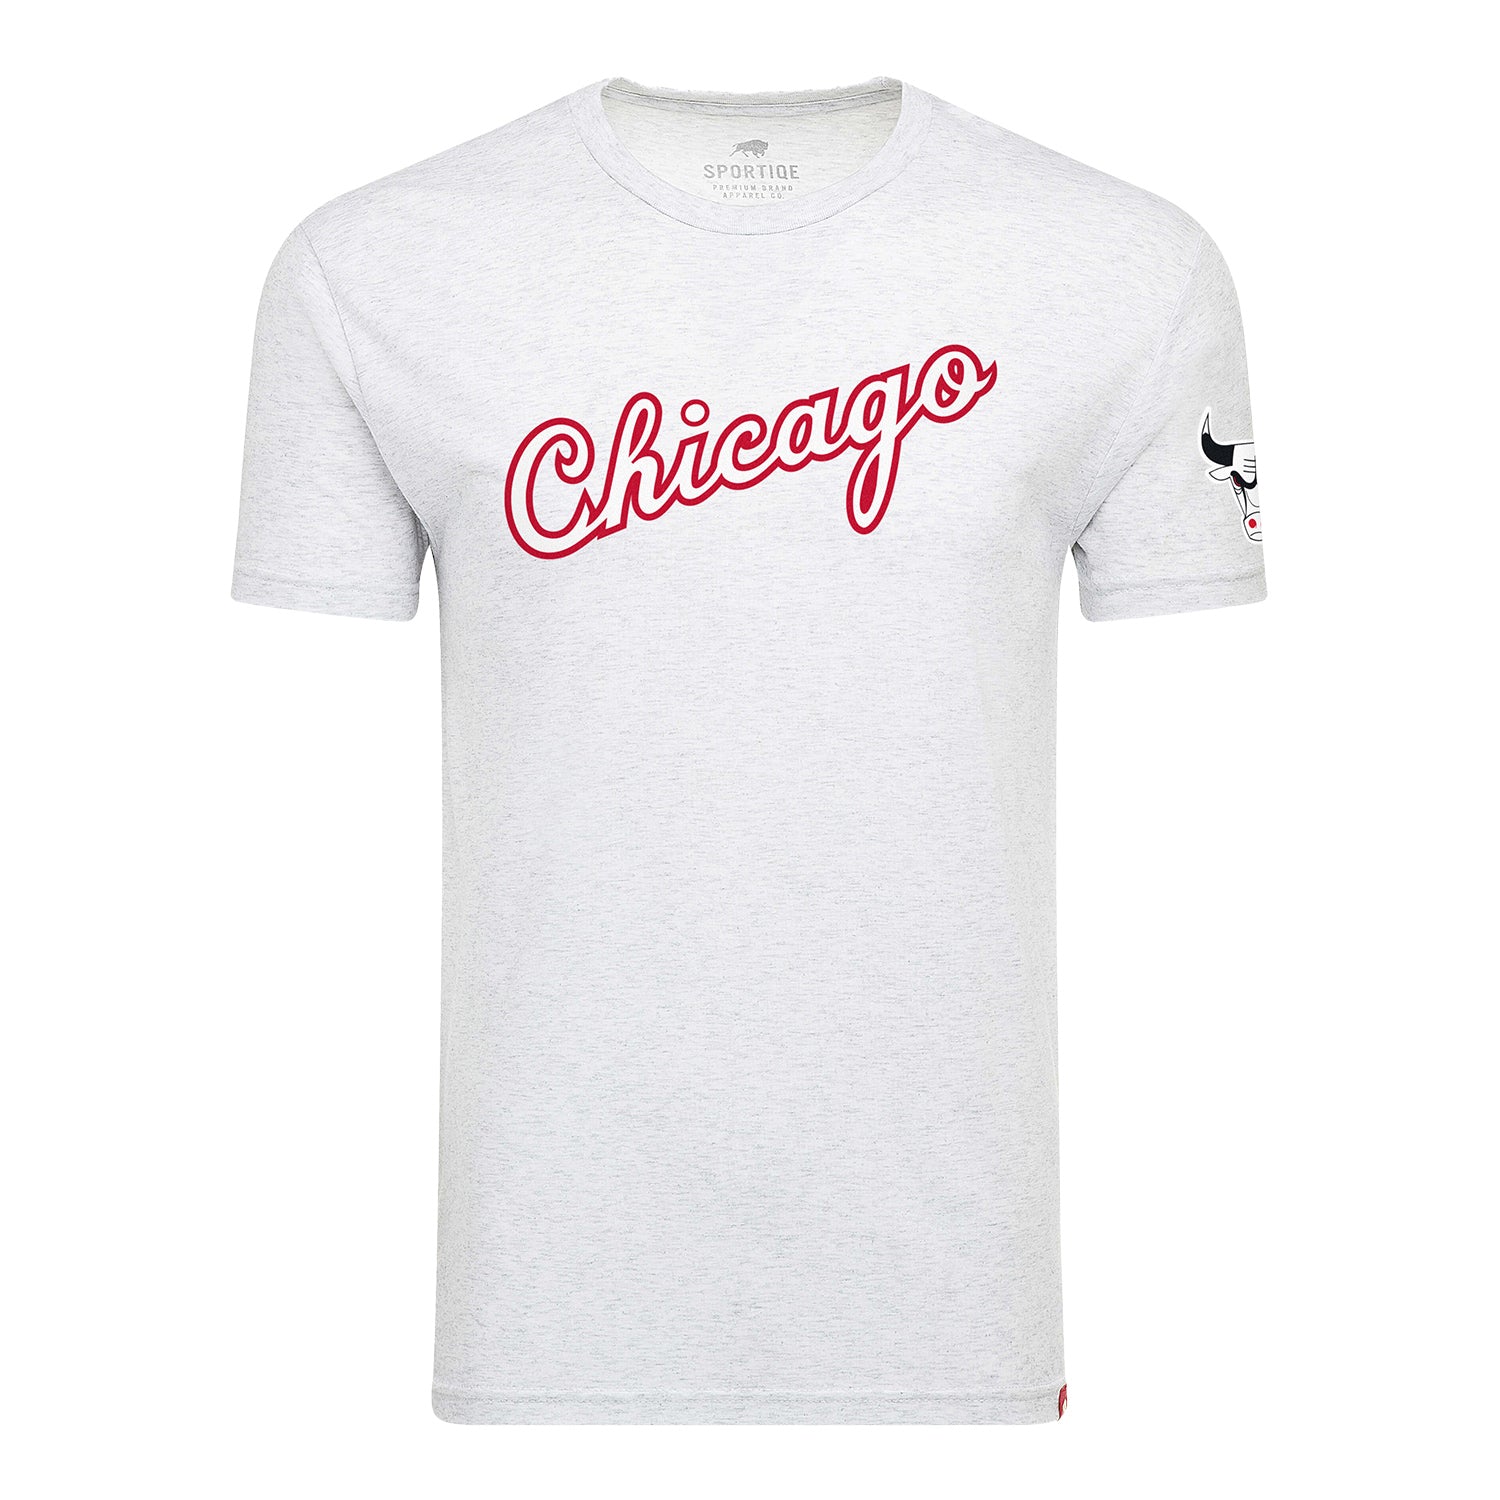 Sportiqe Bulls City Edition Phoebe T-Shirt - Women's